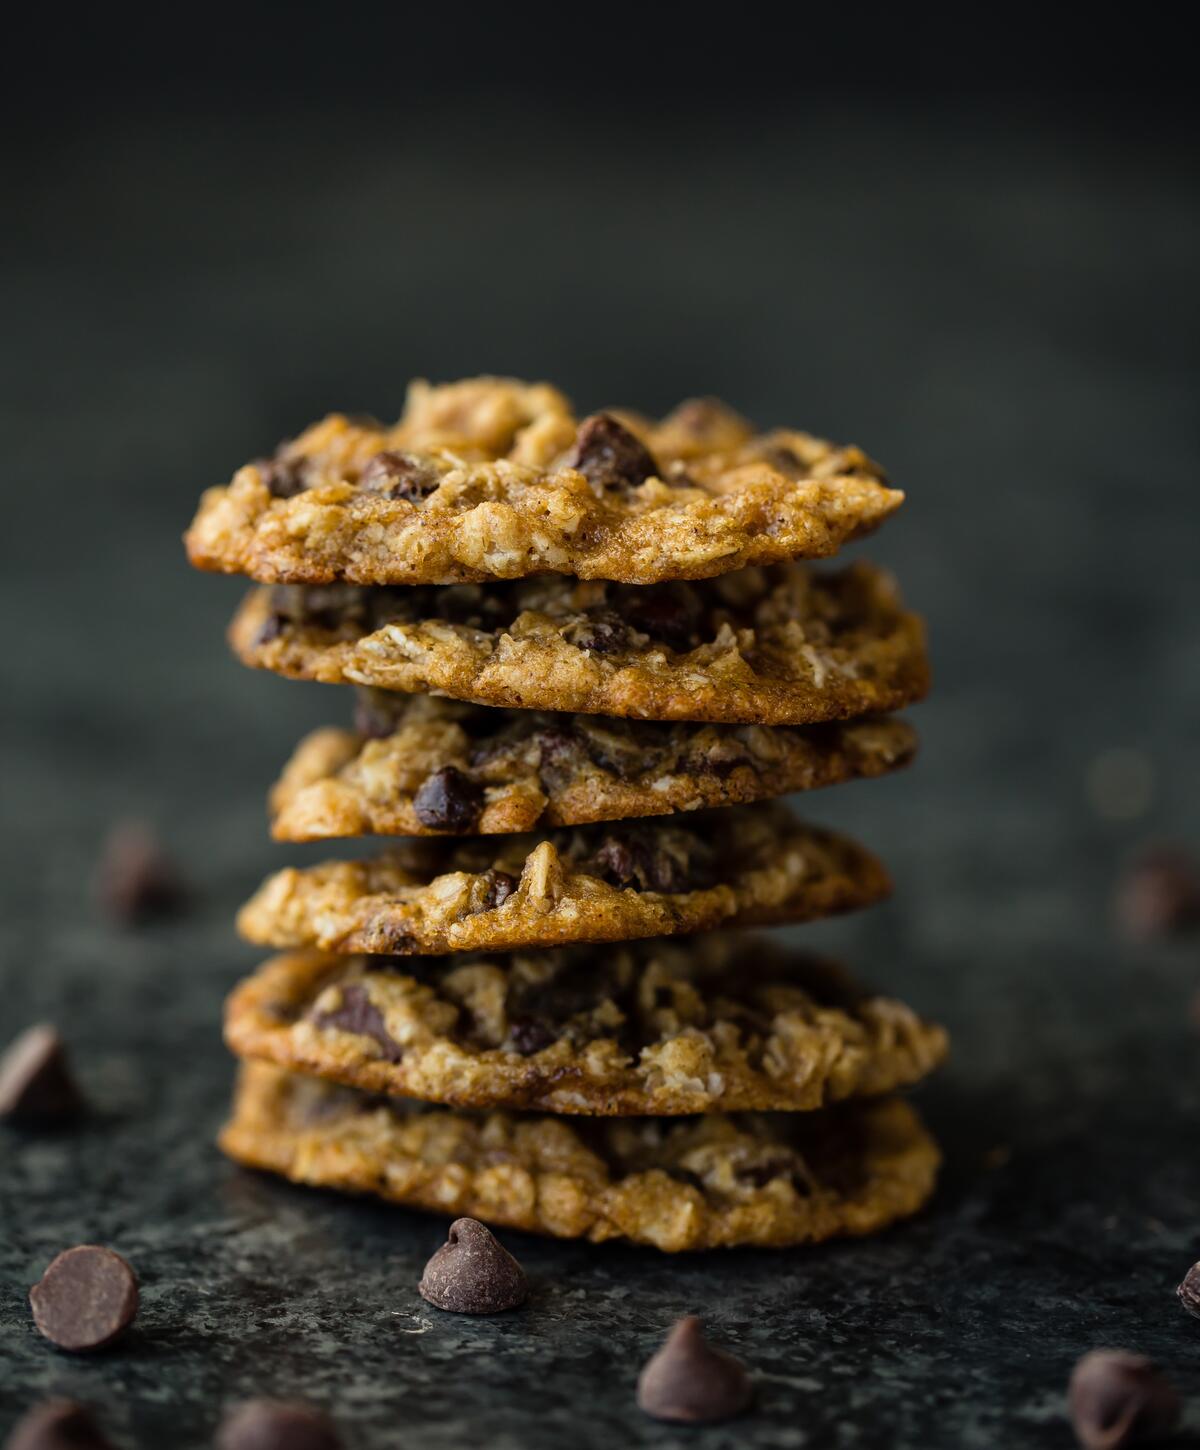 Oatmeal cookies with chocolate chunks